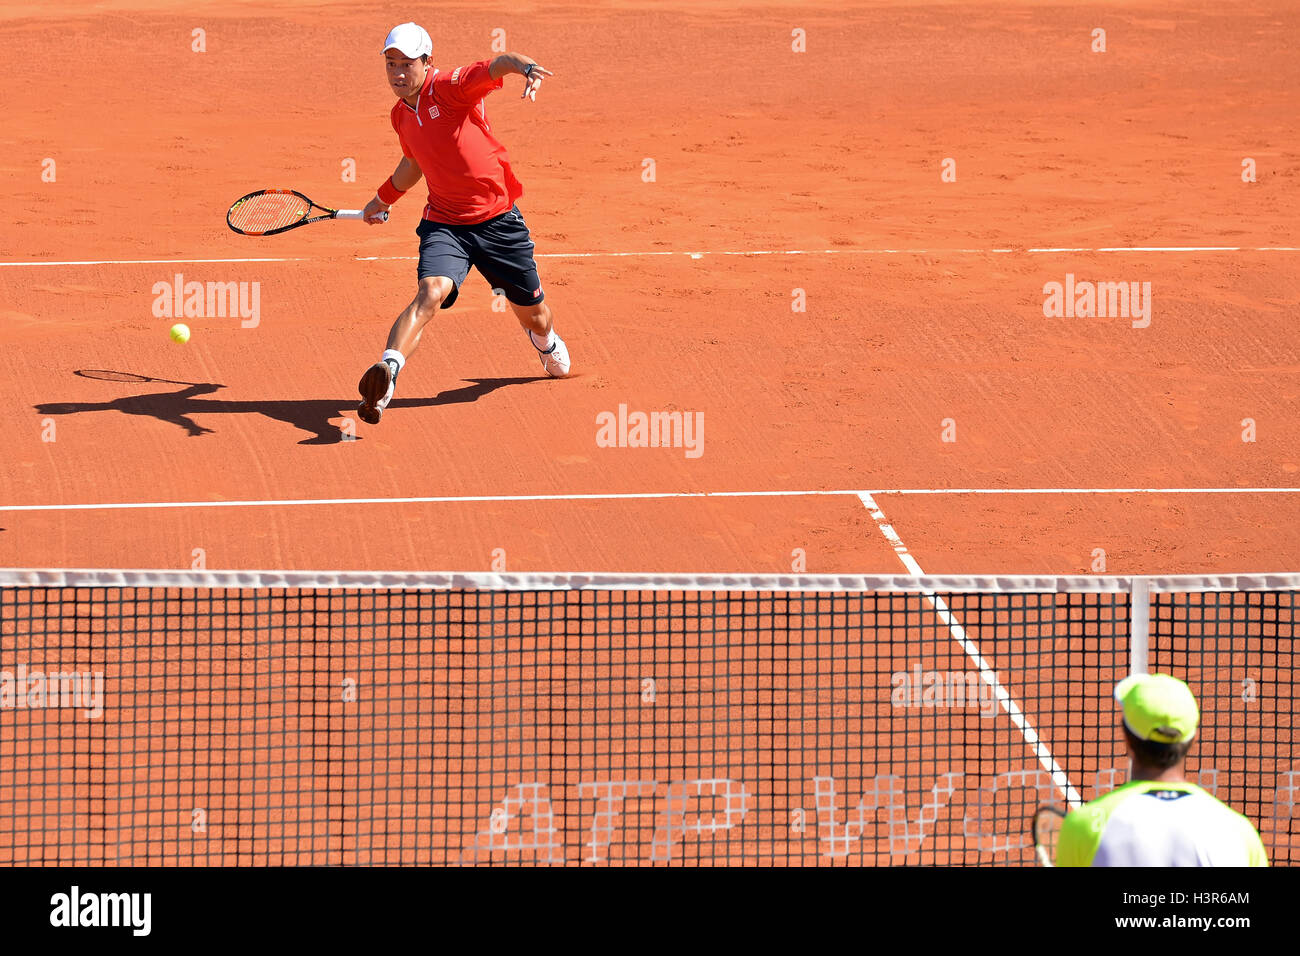 BARCELONA - 21 APR: Kei Nishikori (Tennisspieler aus Japan) spielt bei der ATP Barcelona Open Banc Sabadell. Stockfoto